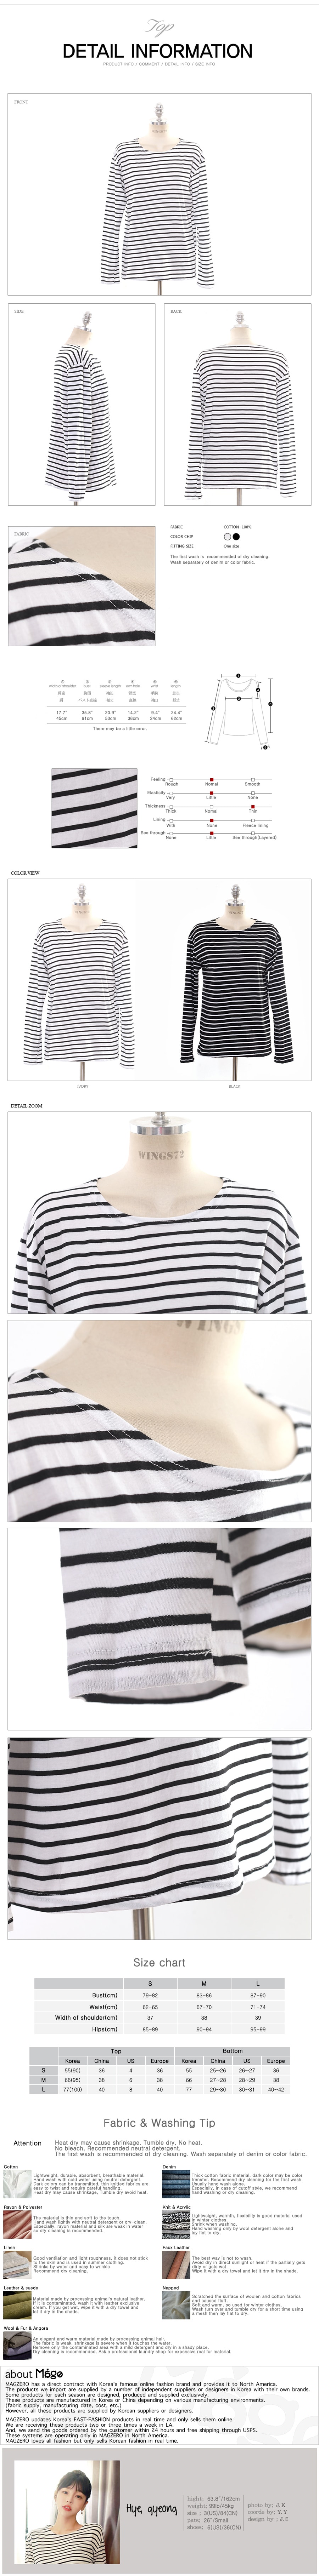 MAGZERO [限量销售] 船领 条纹T恤 #黑色 均码(S-M)